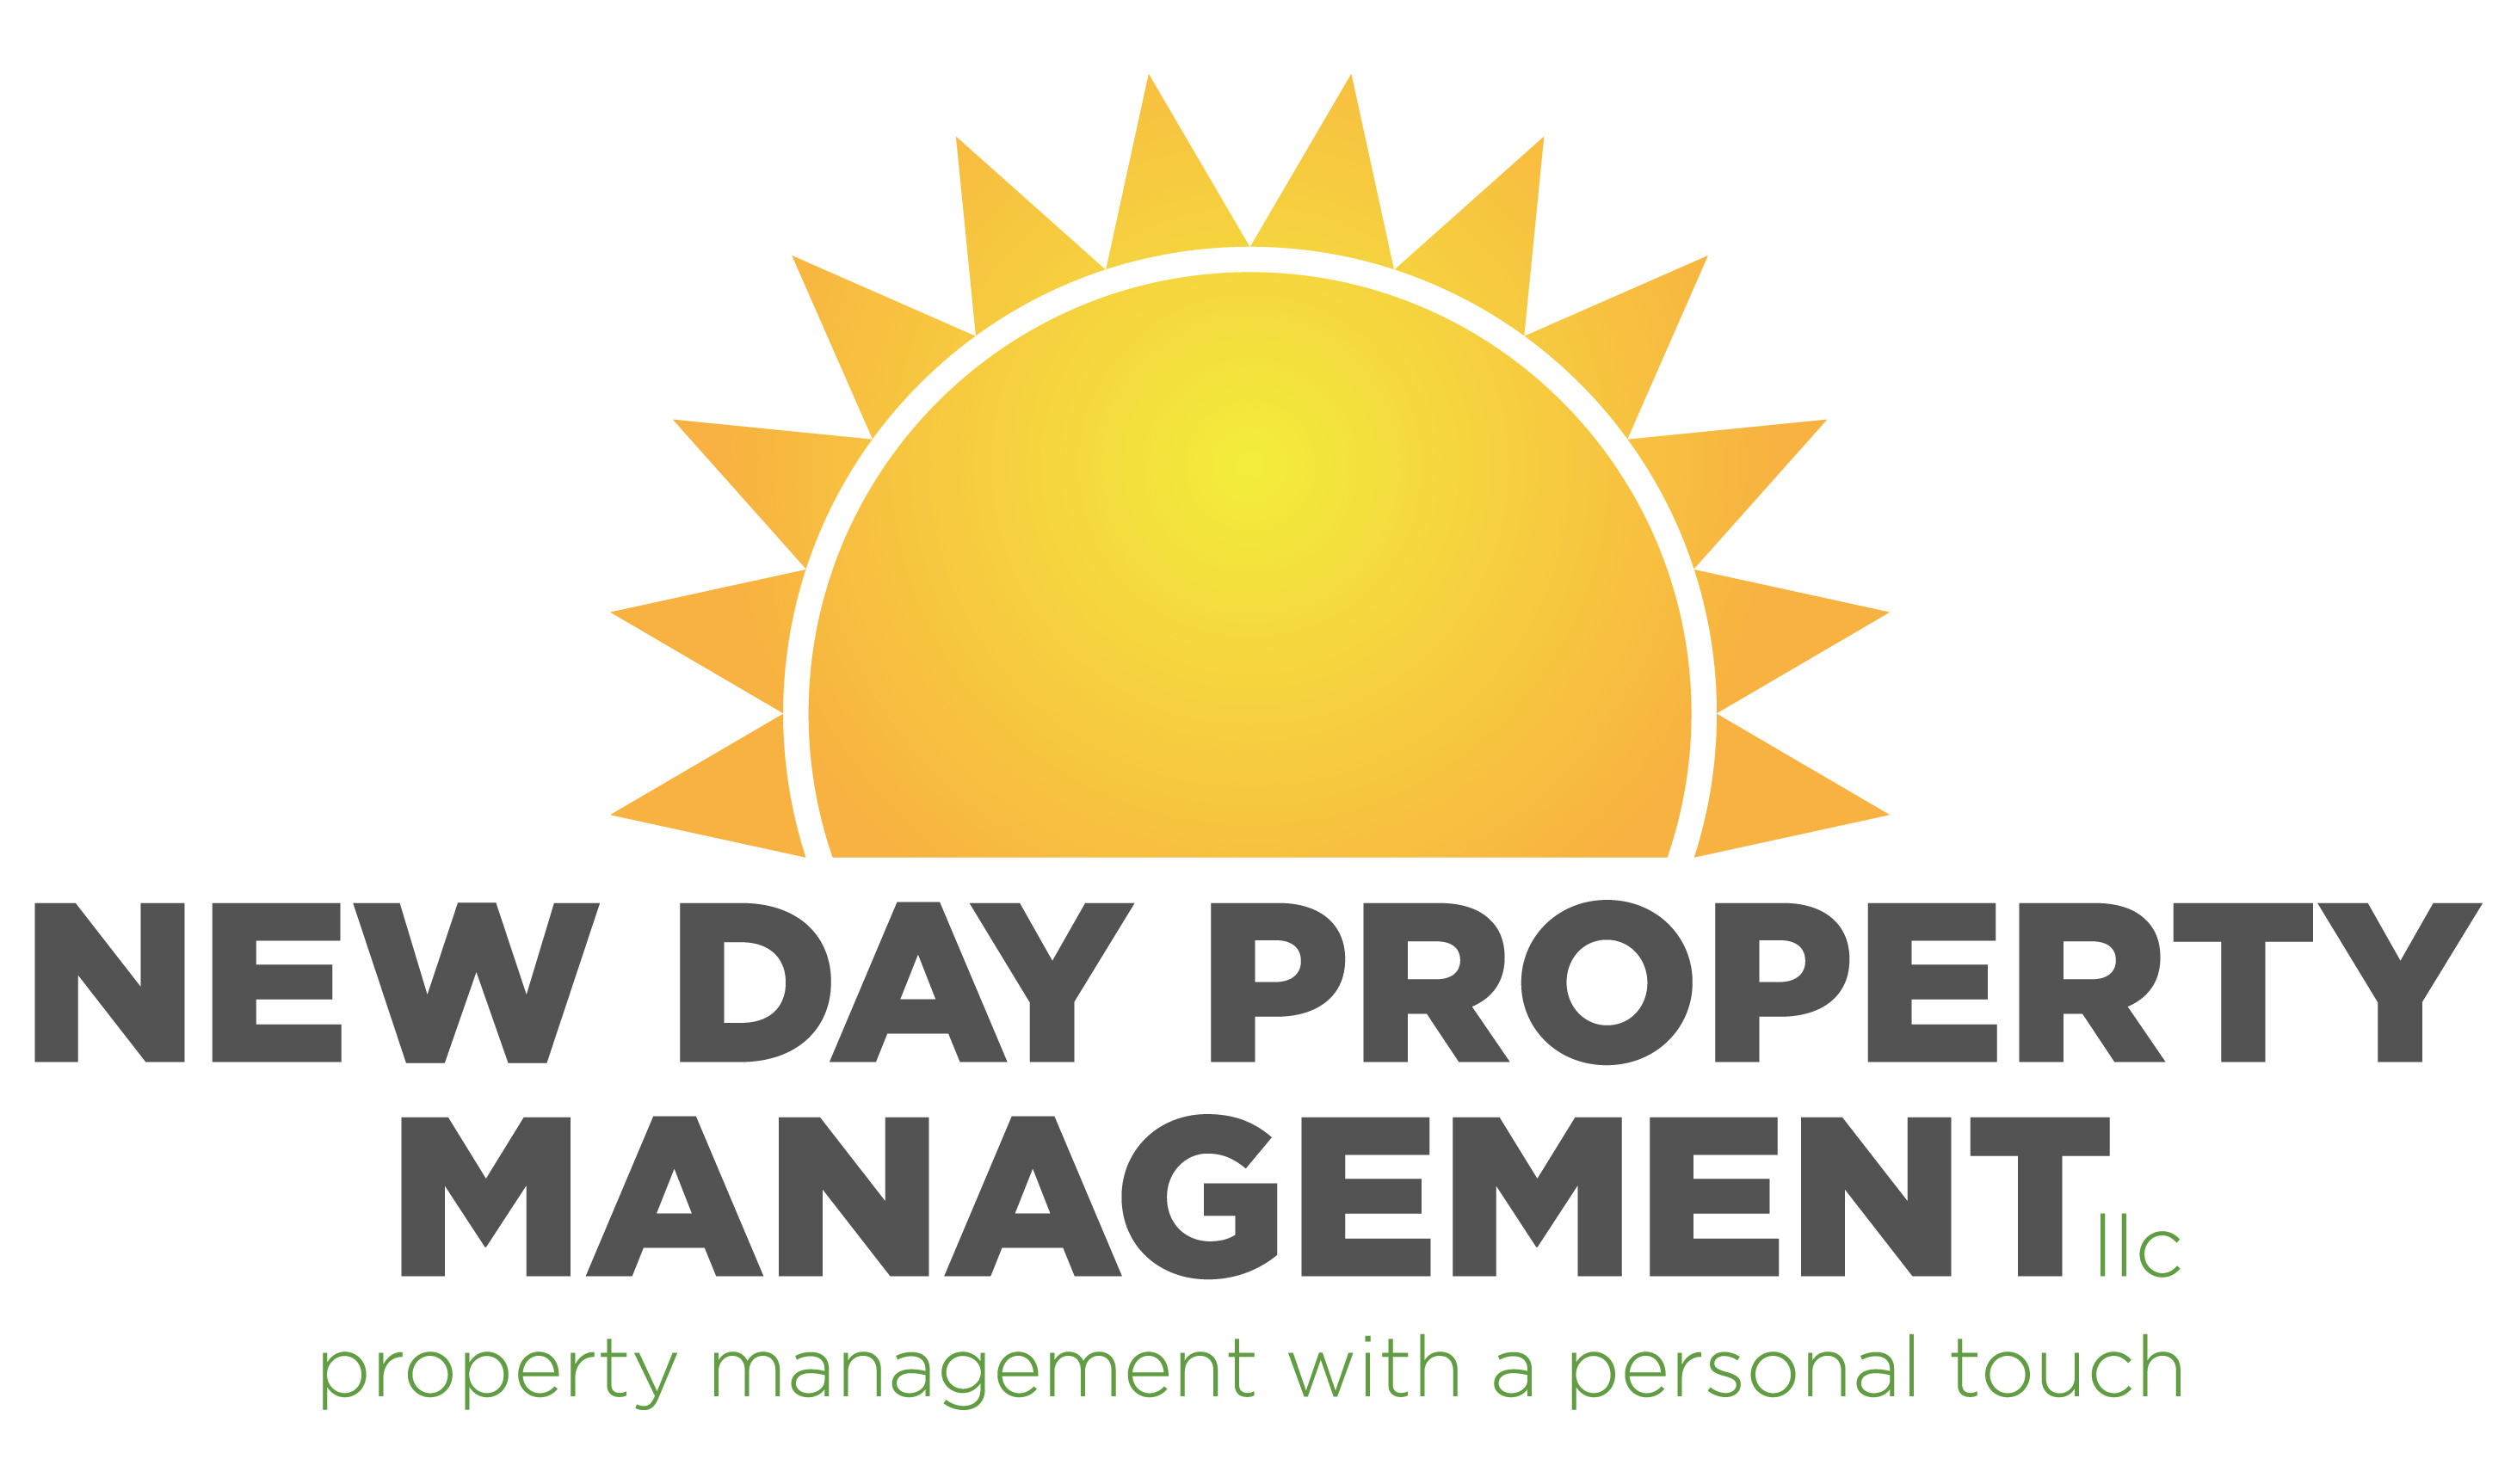 New Day Property Management LLC